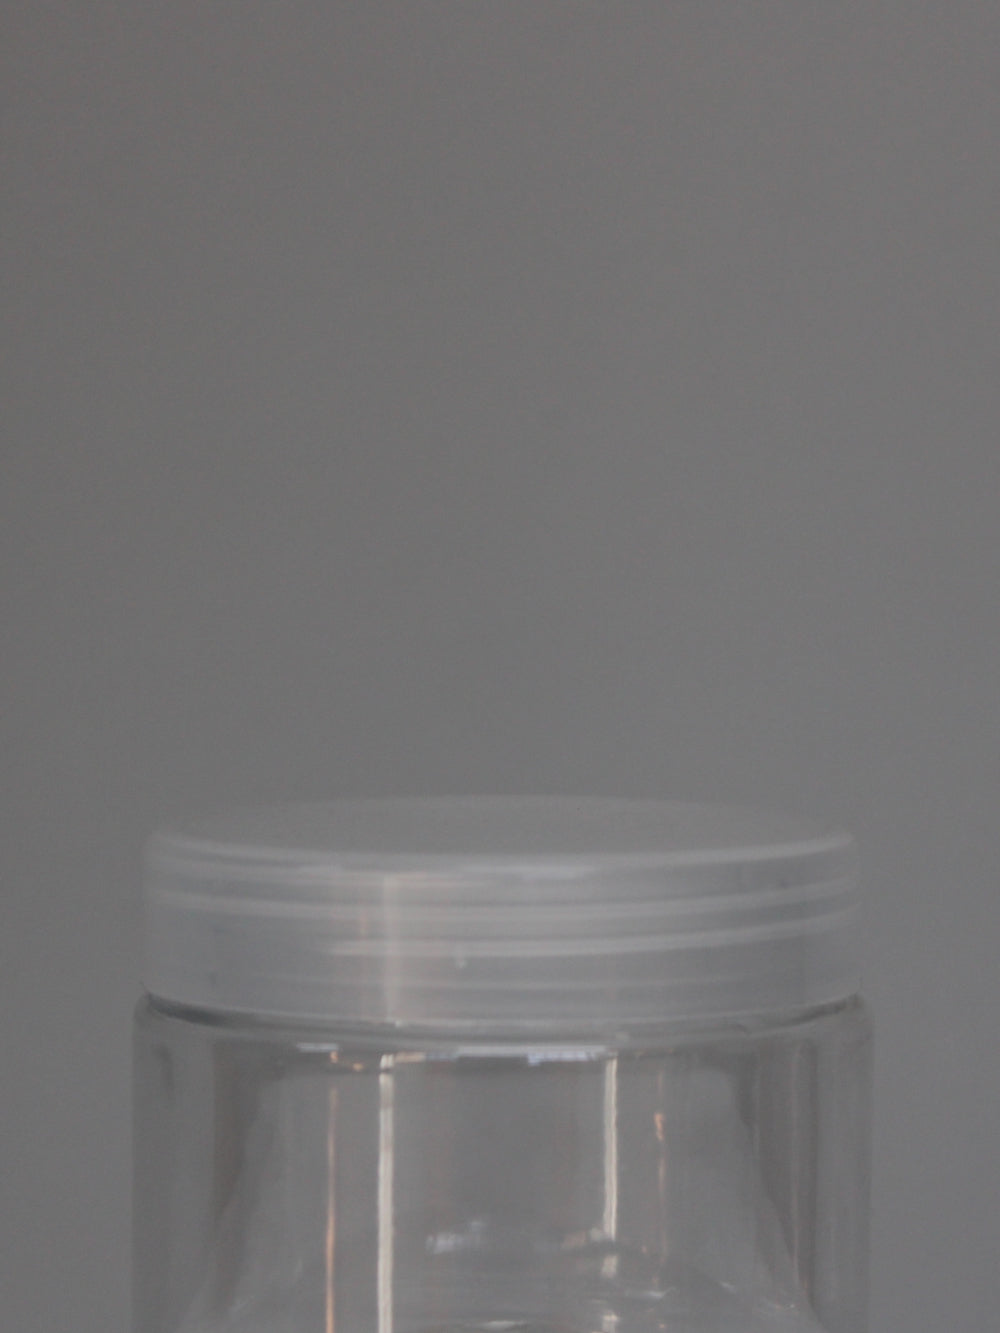 250ml Crystal PET Jar - (Pack of 100 units)